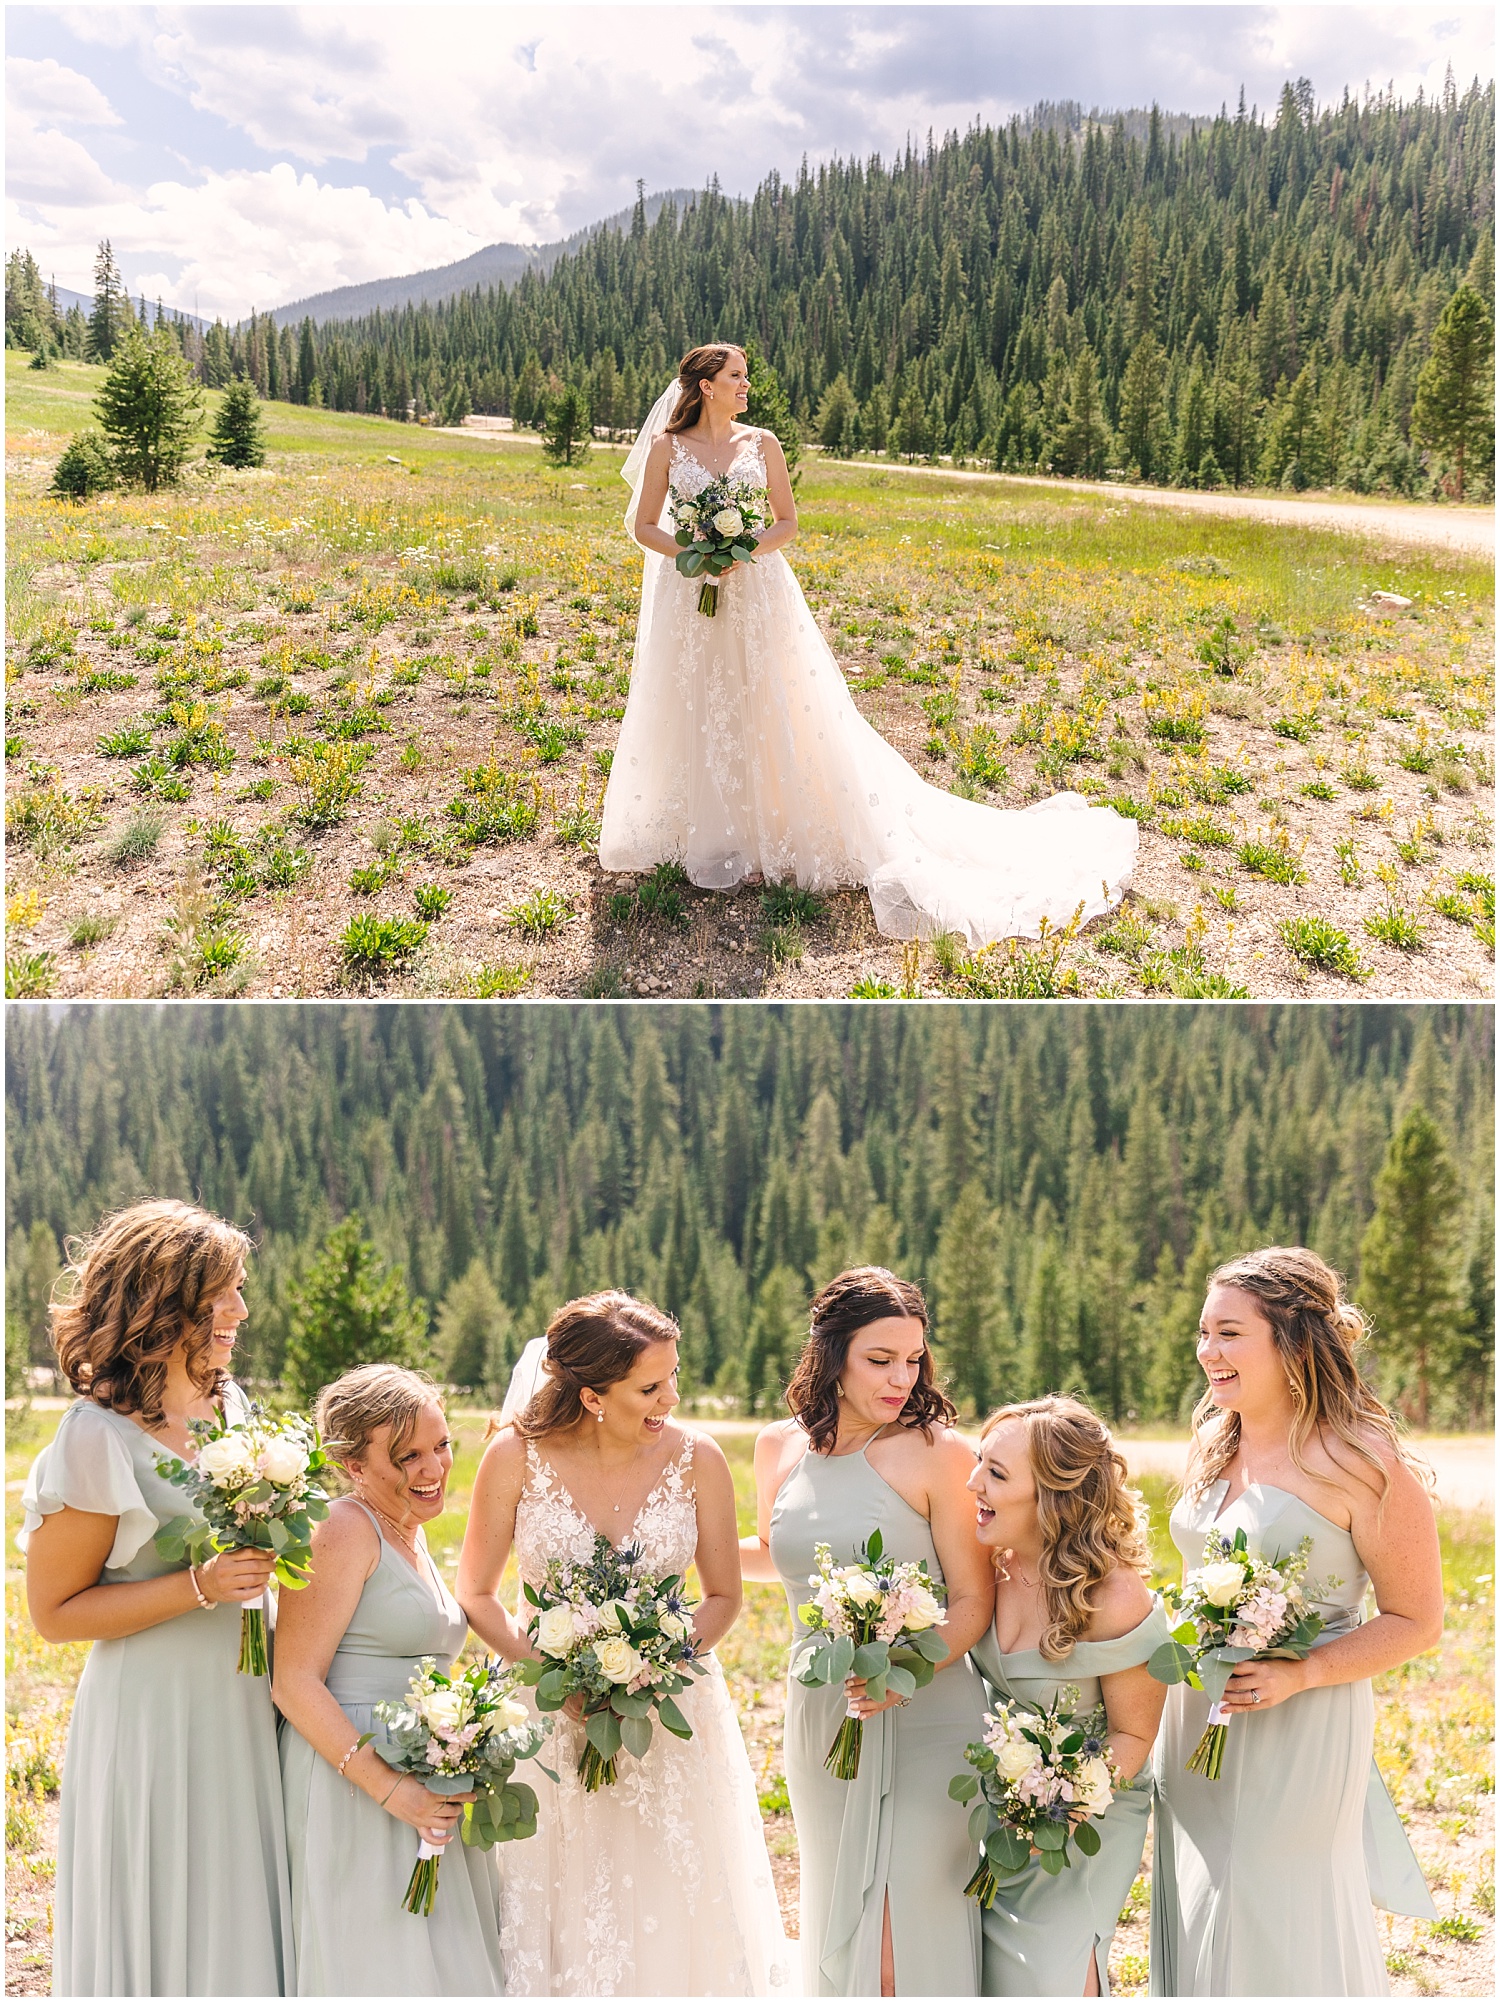 Bride and bridesmaid style for summer mountain wedding in Winter Park Colorado